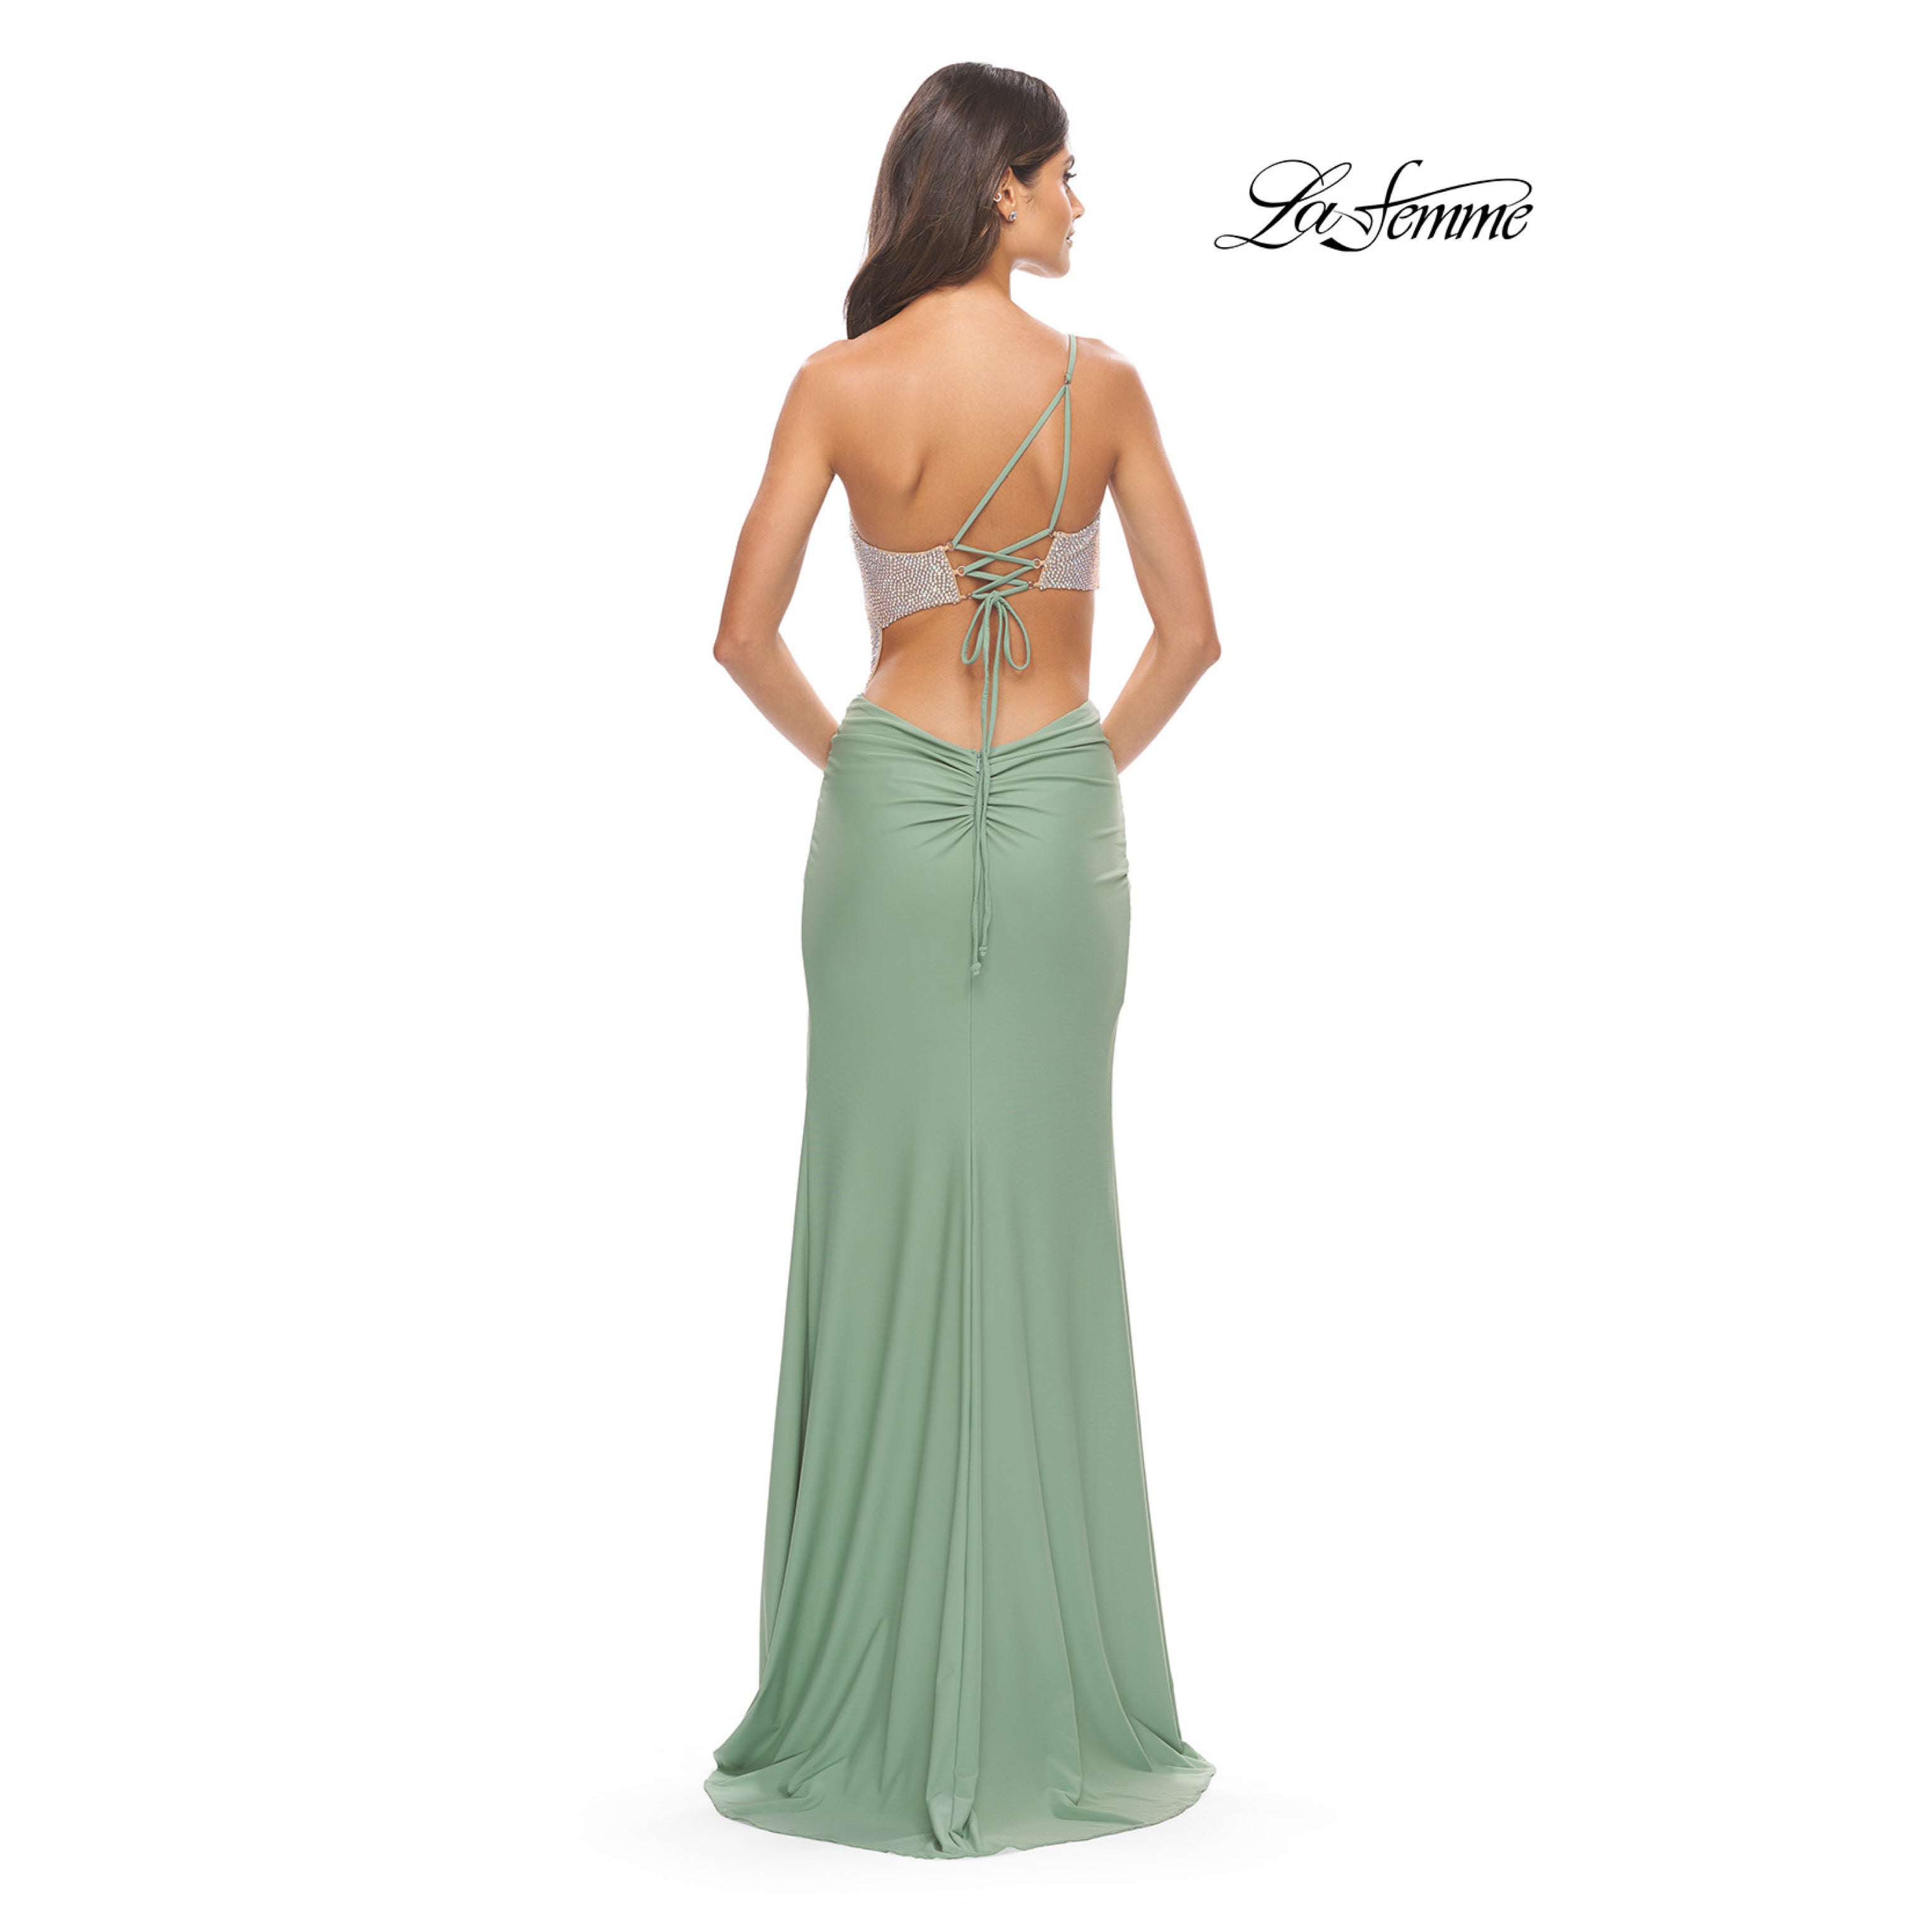 La Femme sage dress, size 0, NEW WITH TAGS!